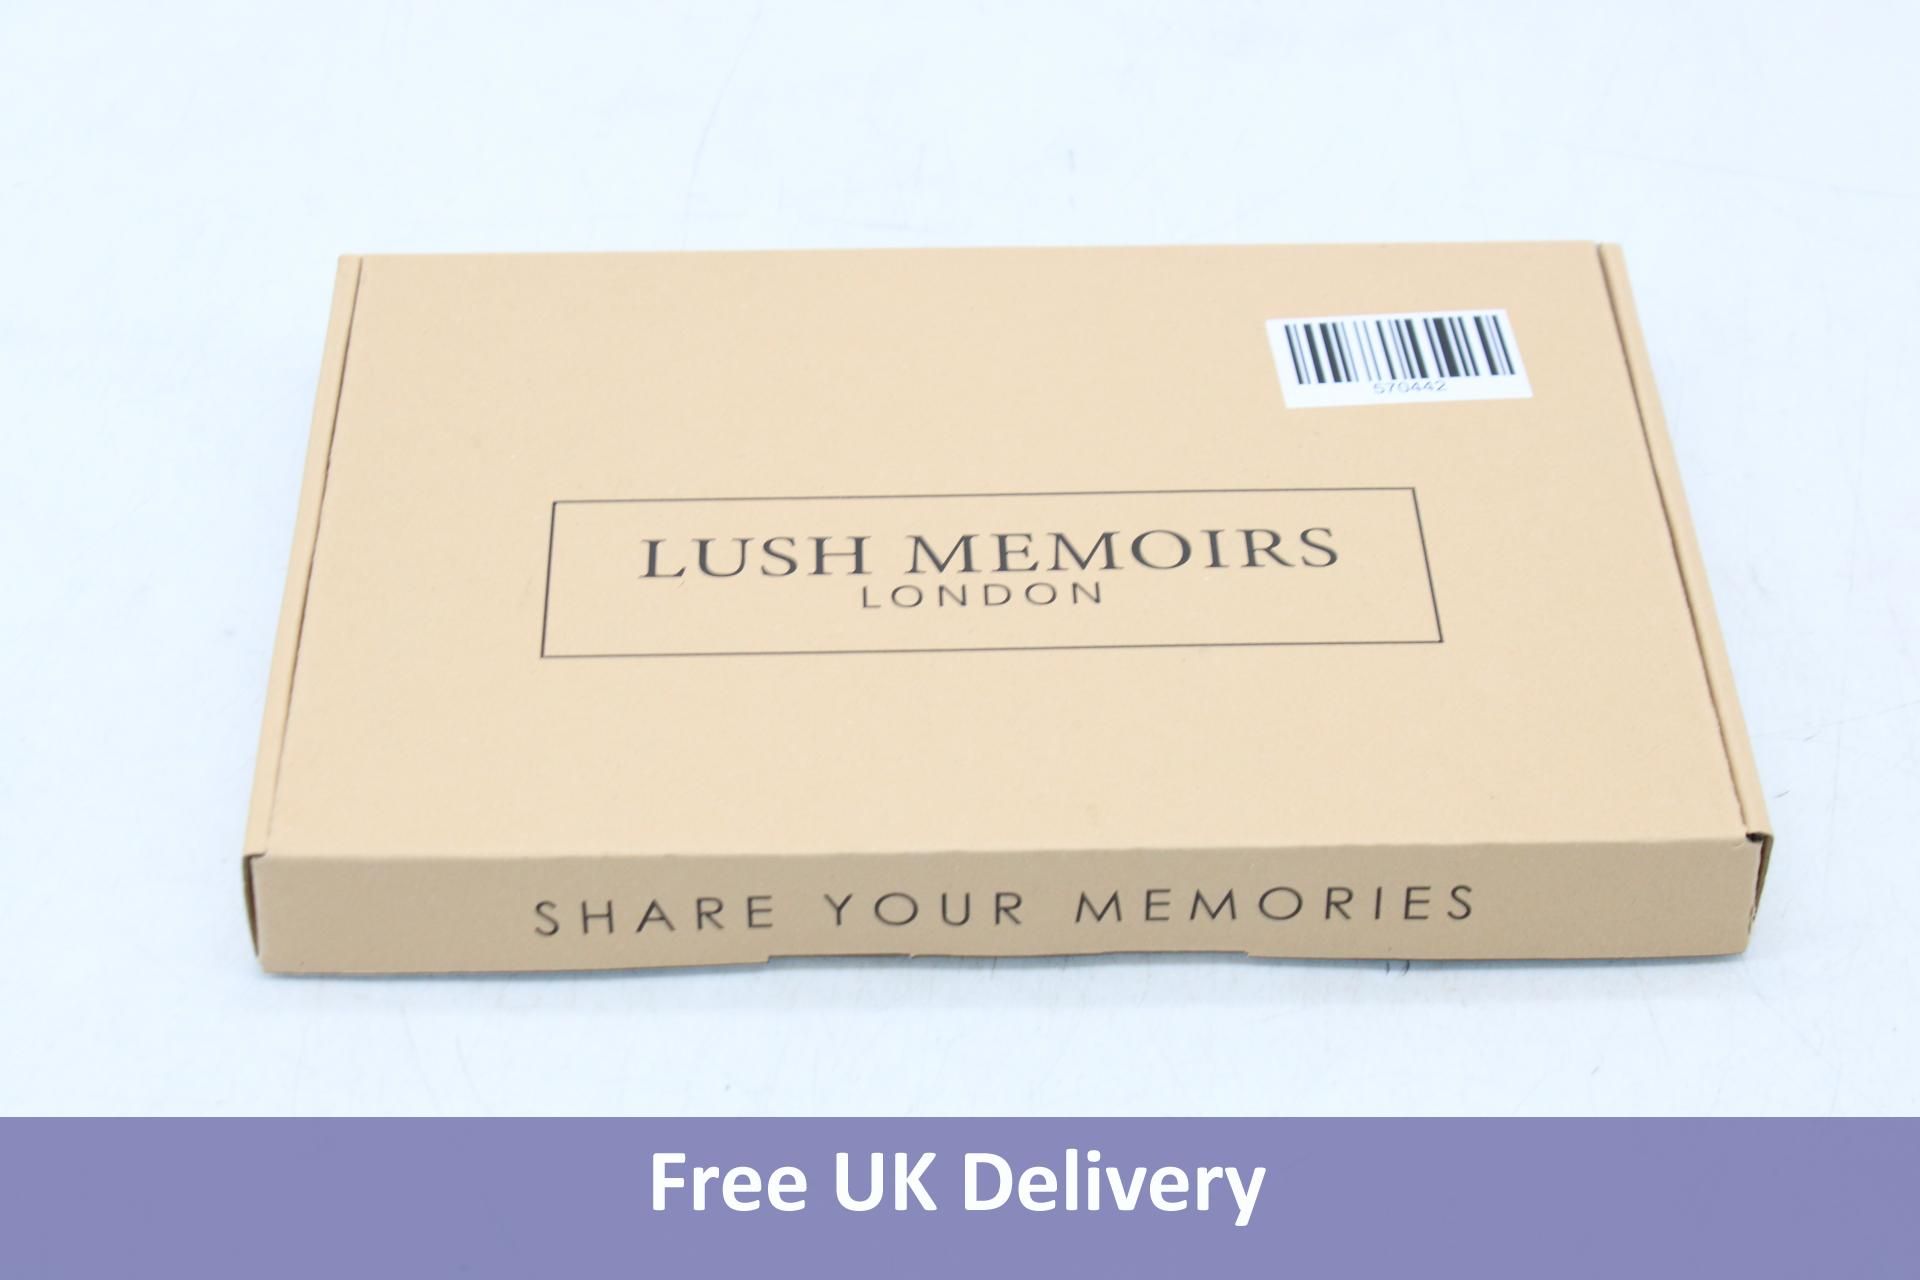 Ten Lush Memoirs London ''Our Wedding'' Video Albums - Image 7 of 10